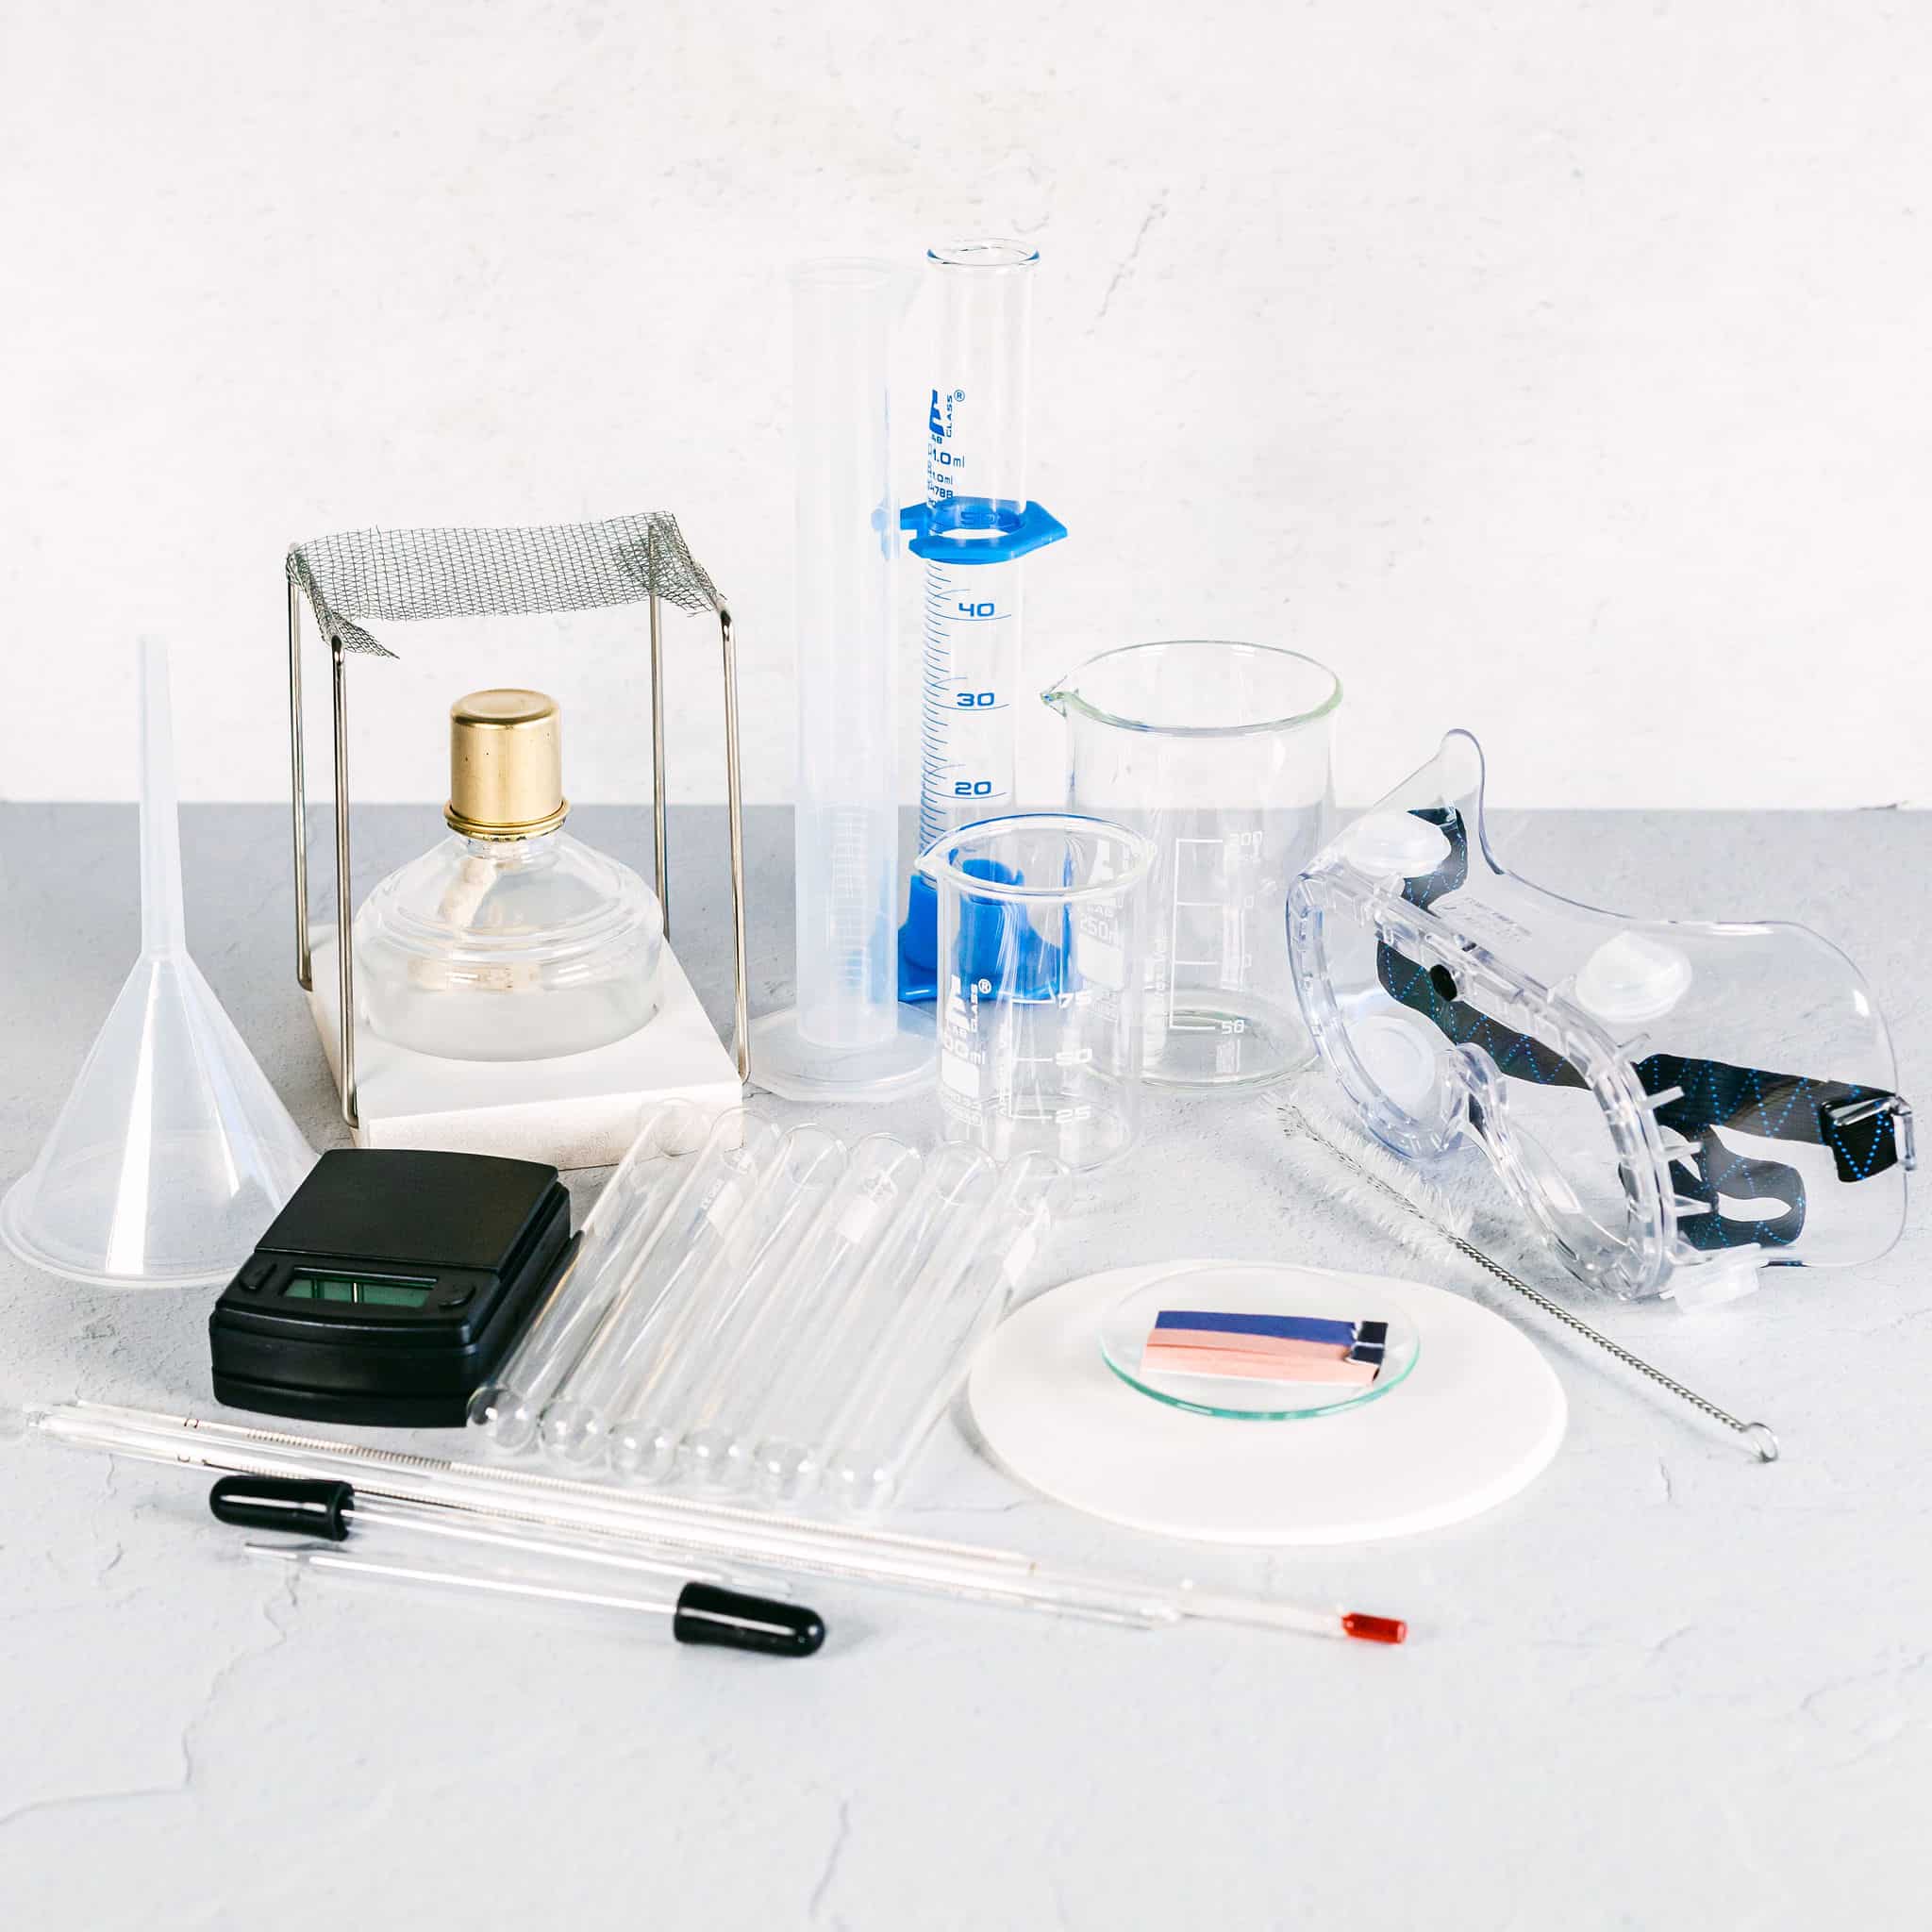 School Chemistry Lab Equipment